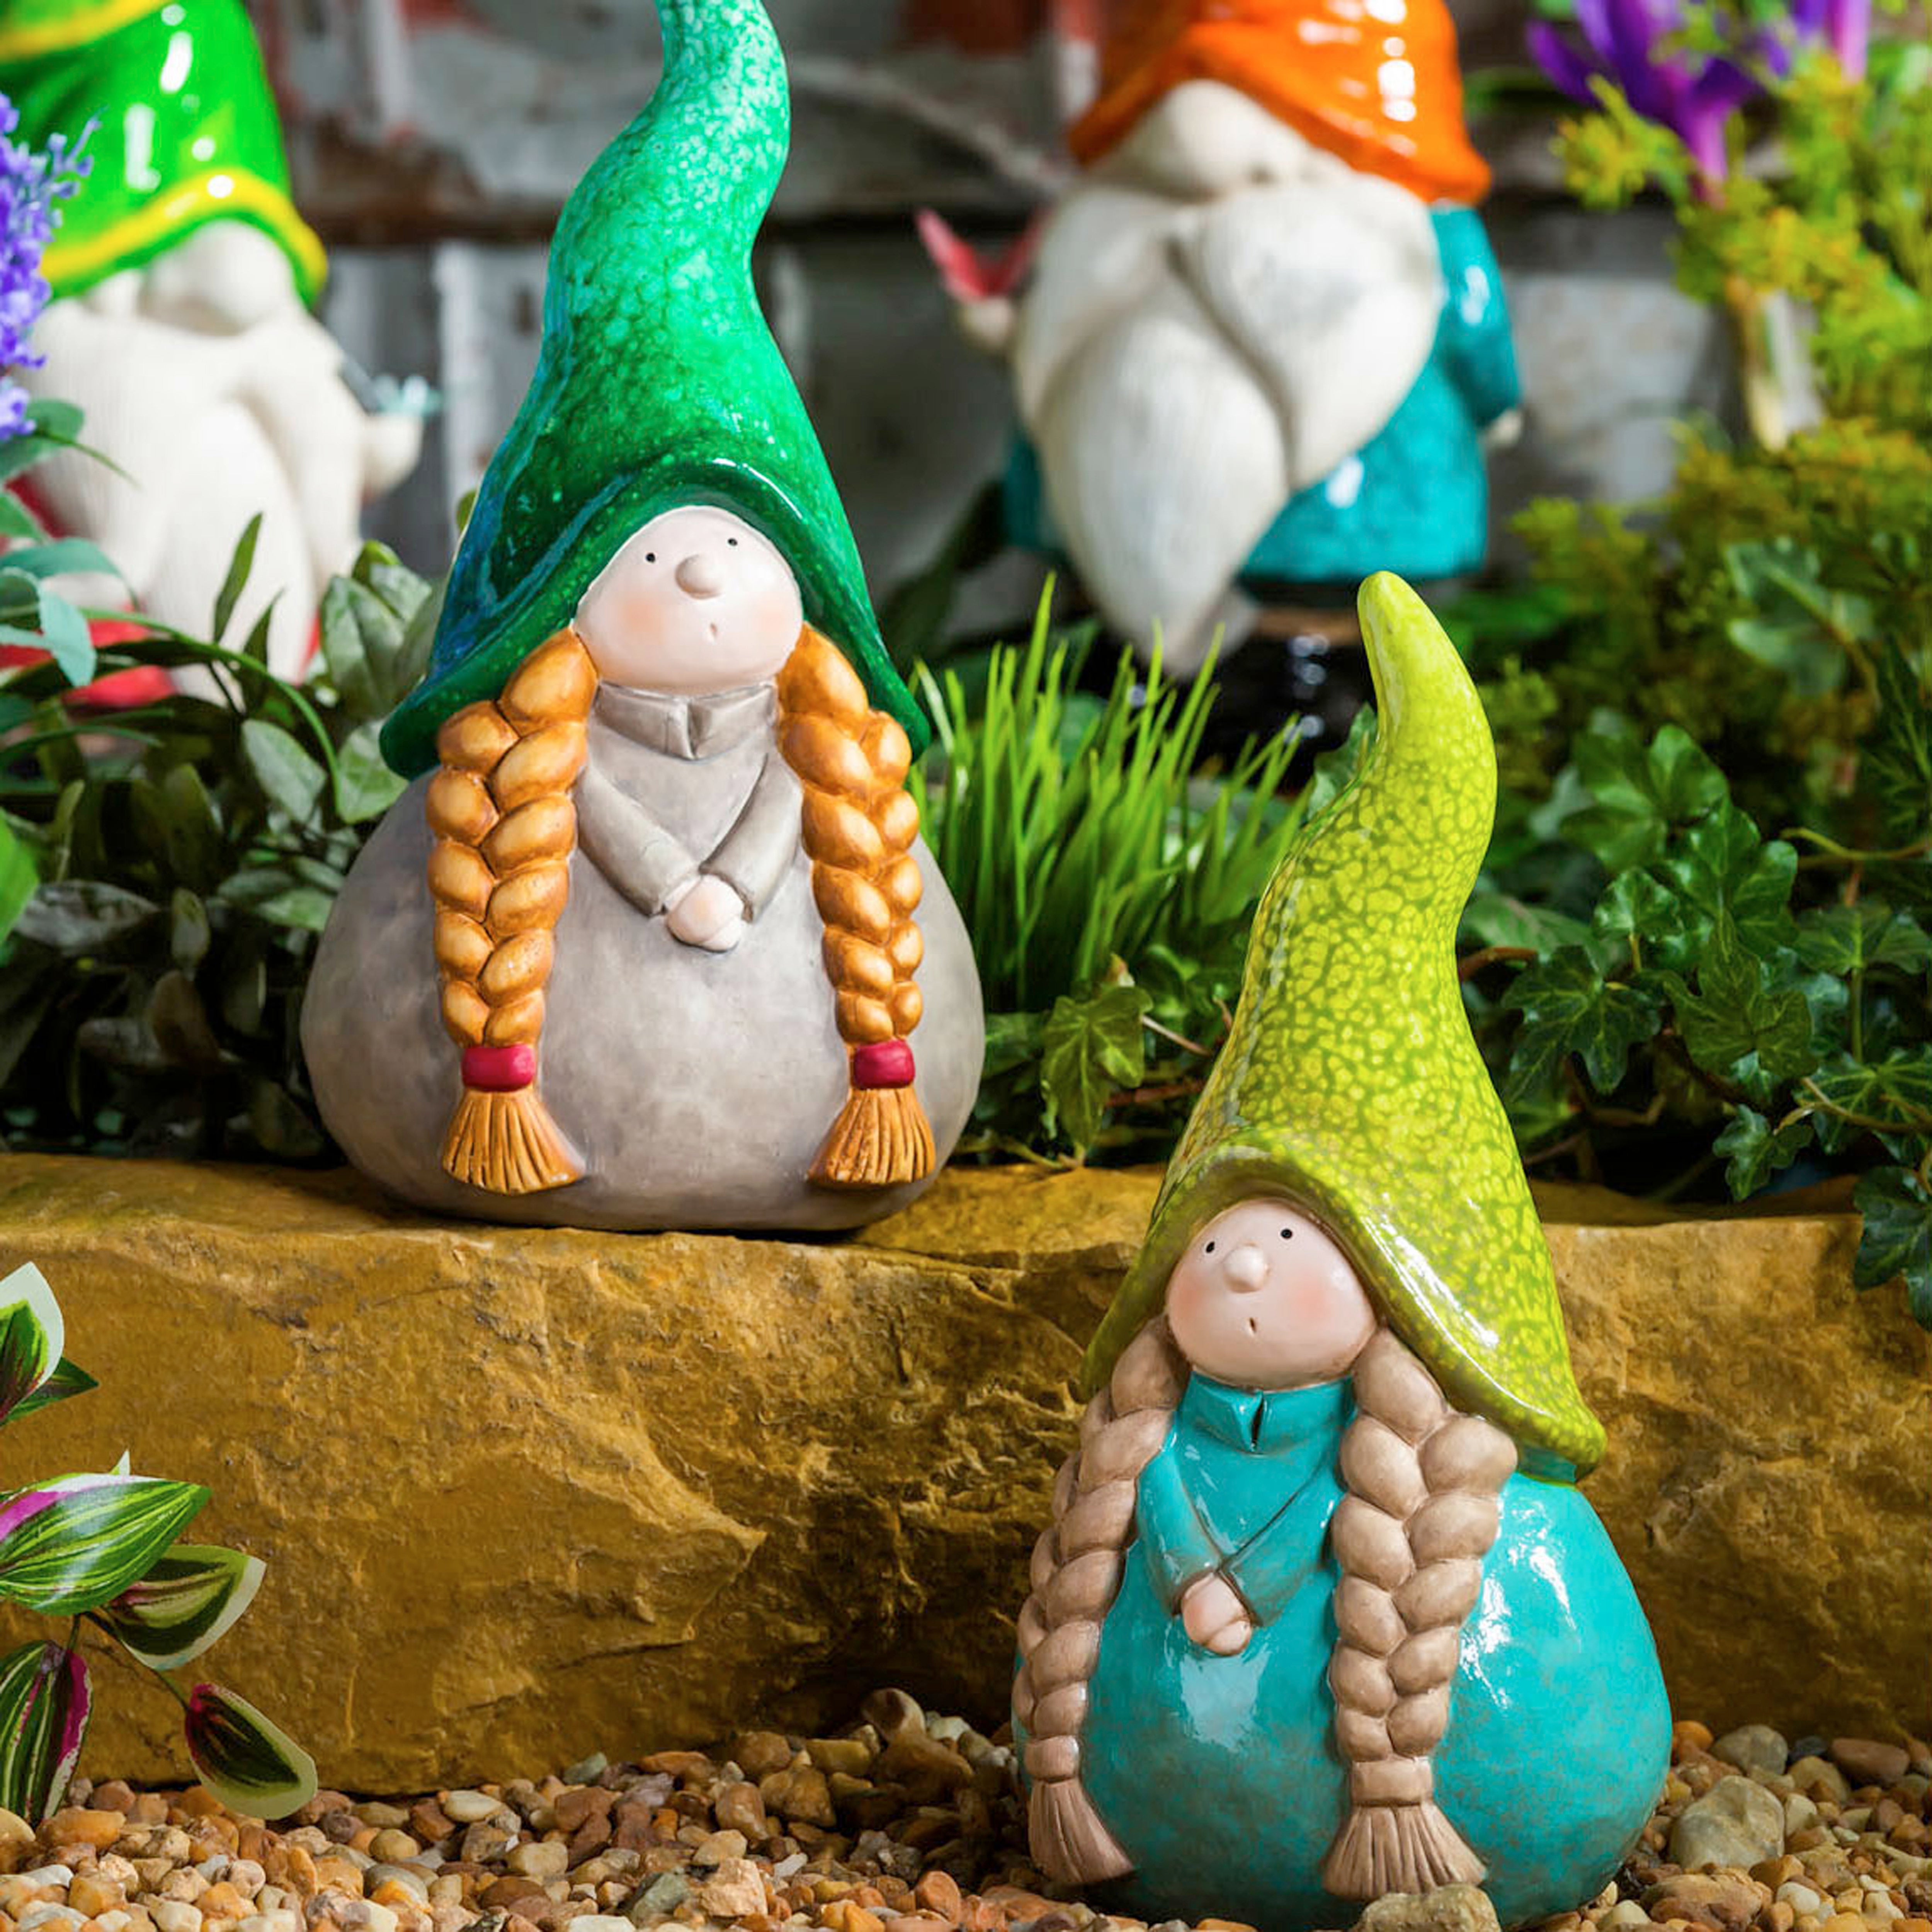 Teal Ceramic Lady Gnome Garden Statuary